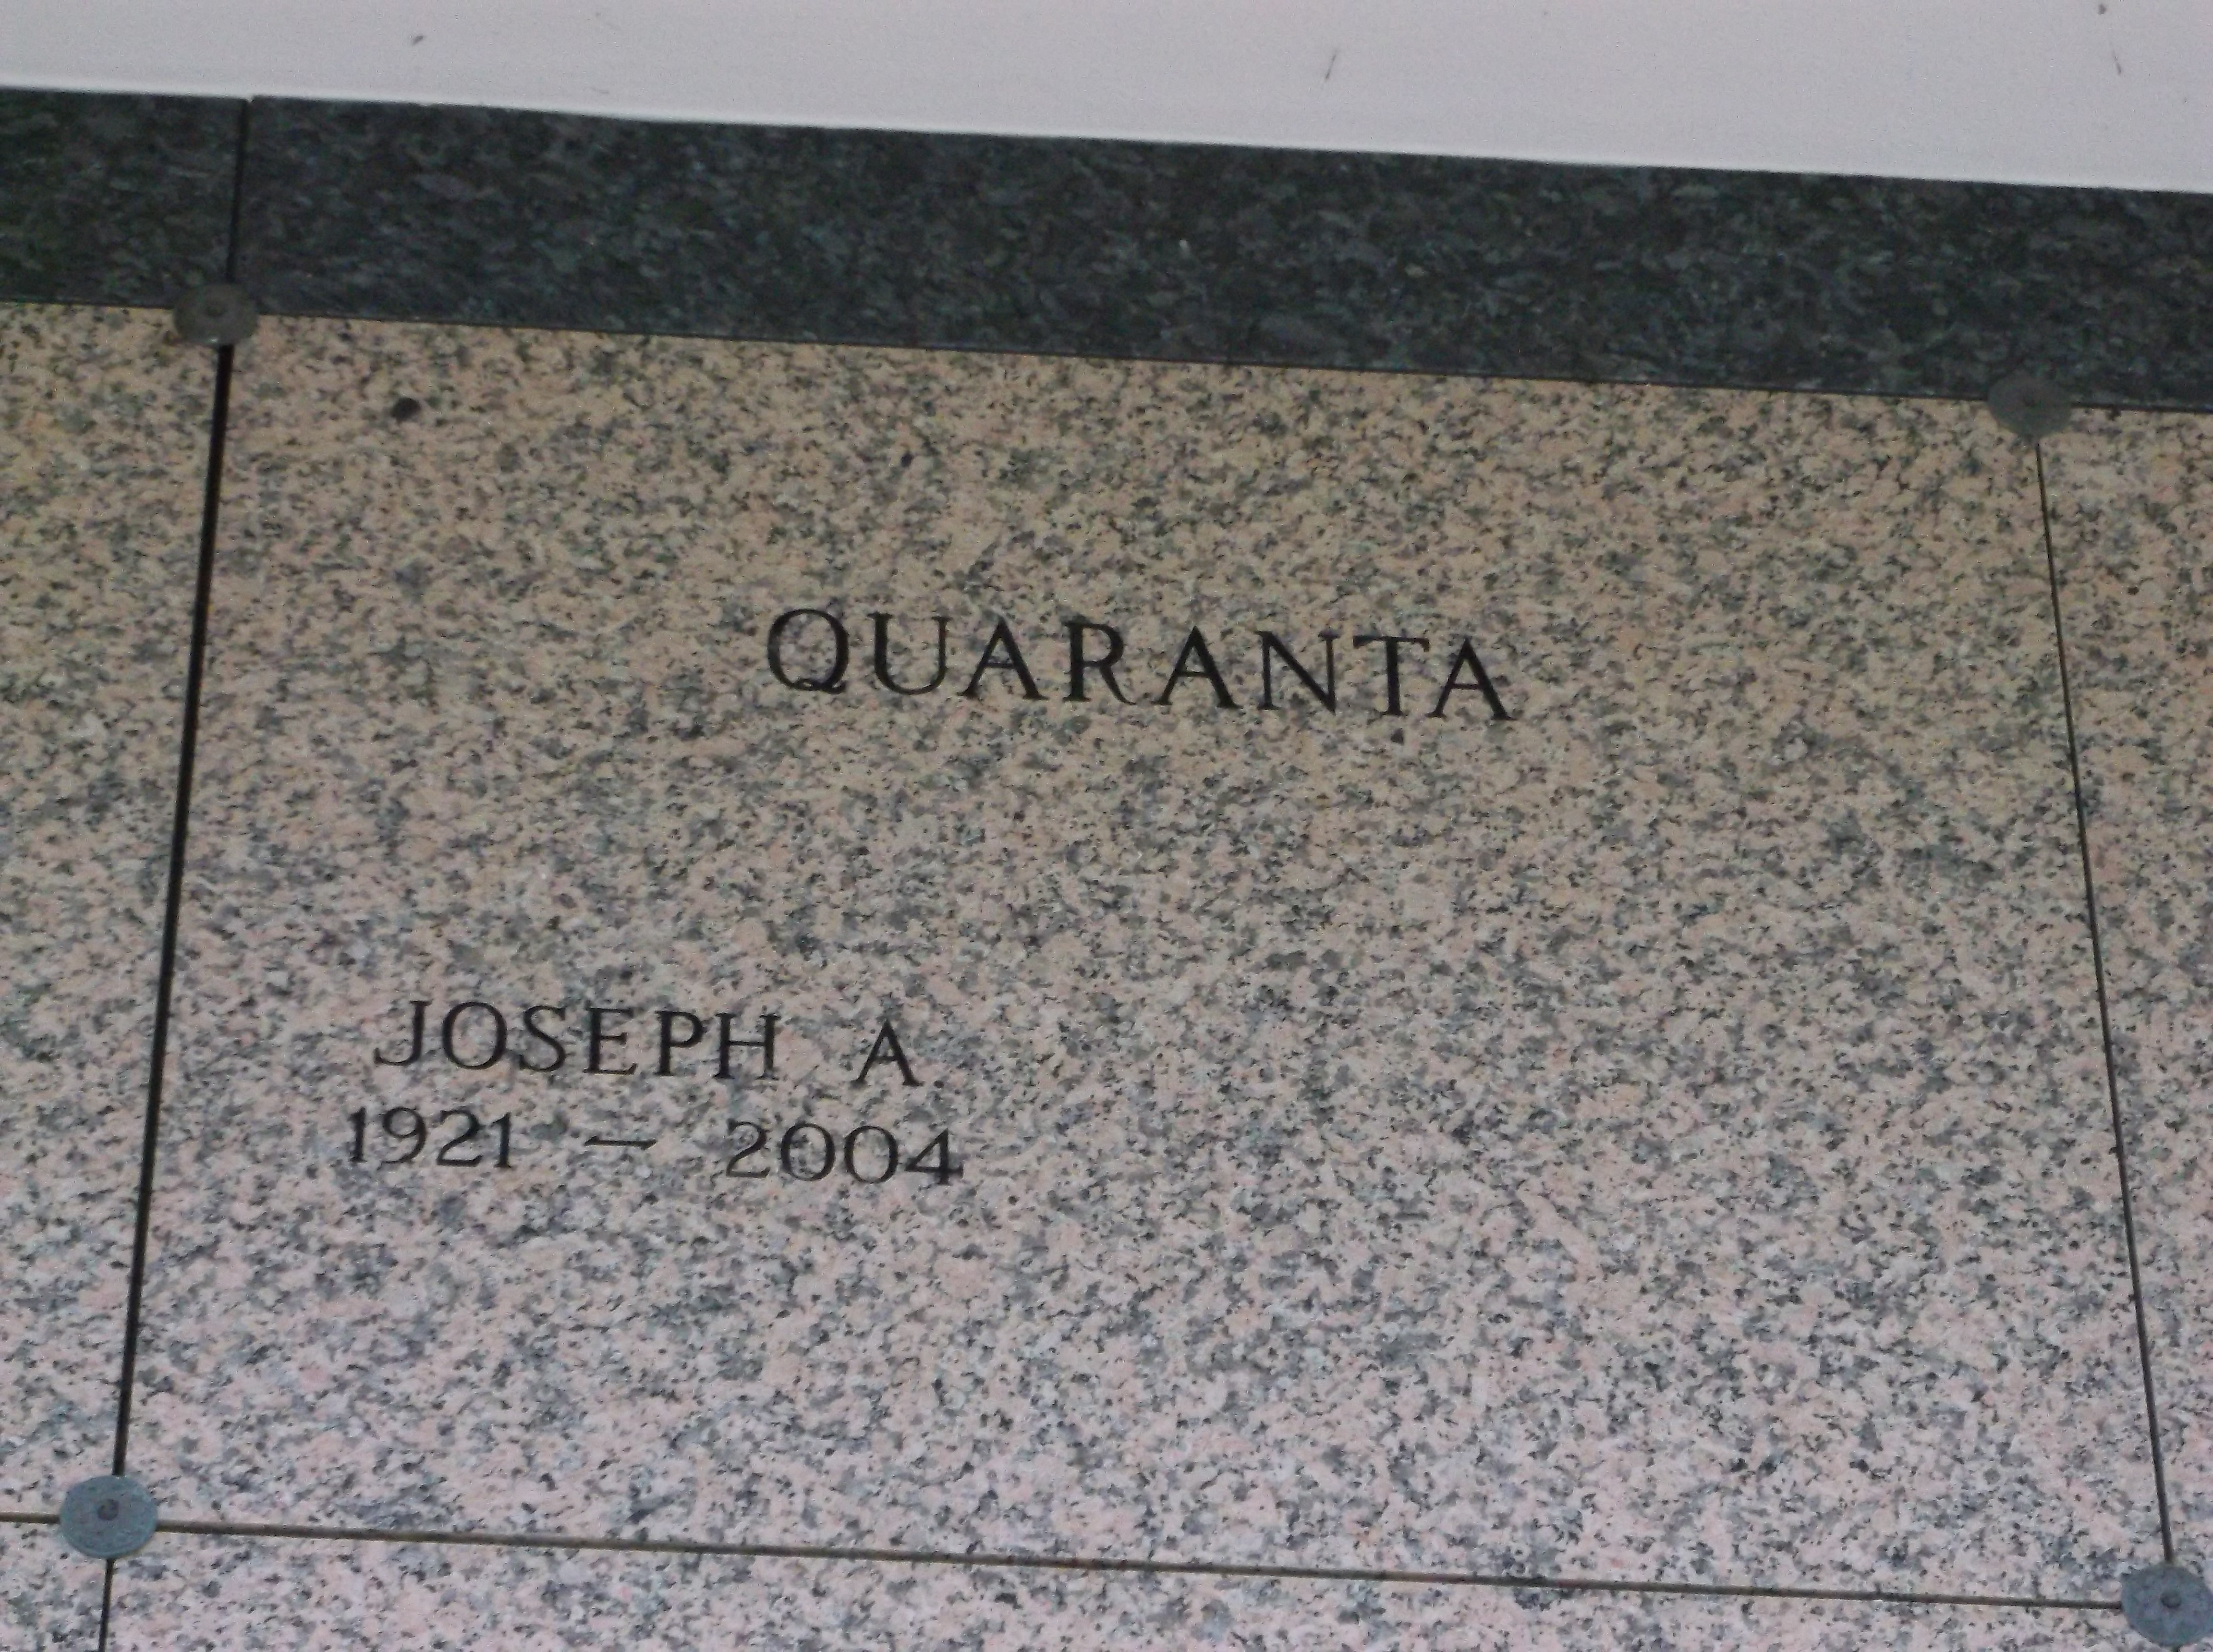 Joseph A Quaranta